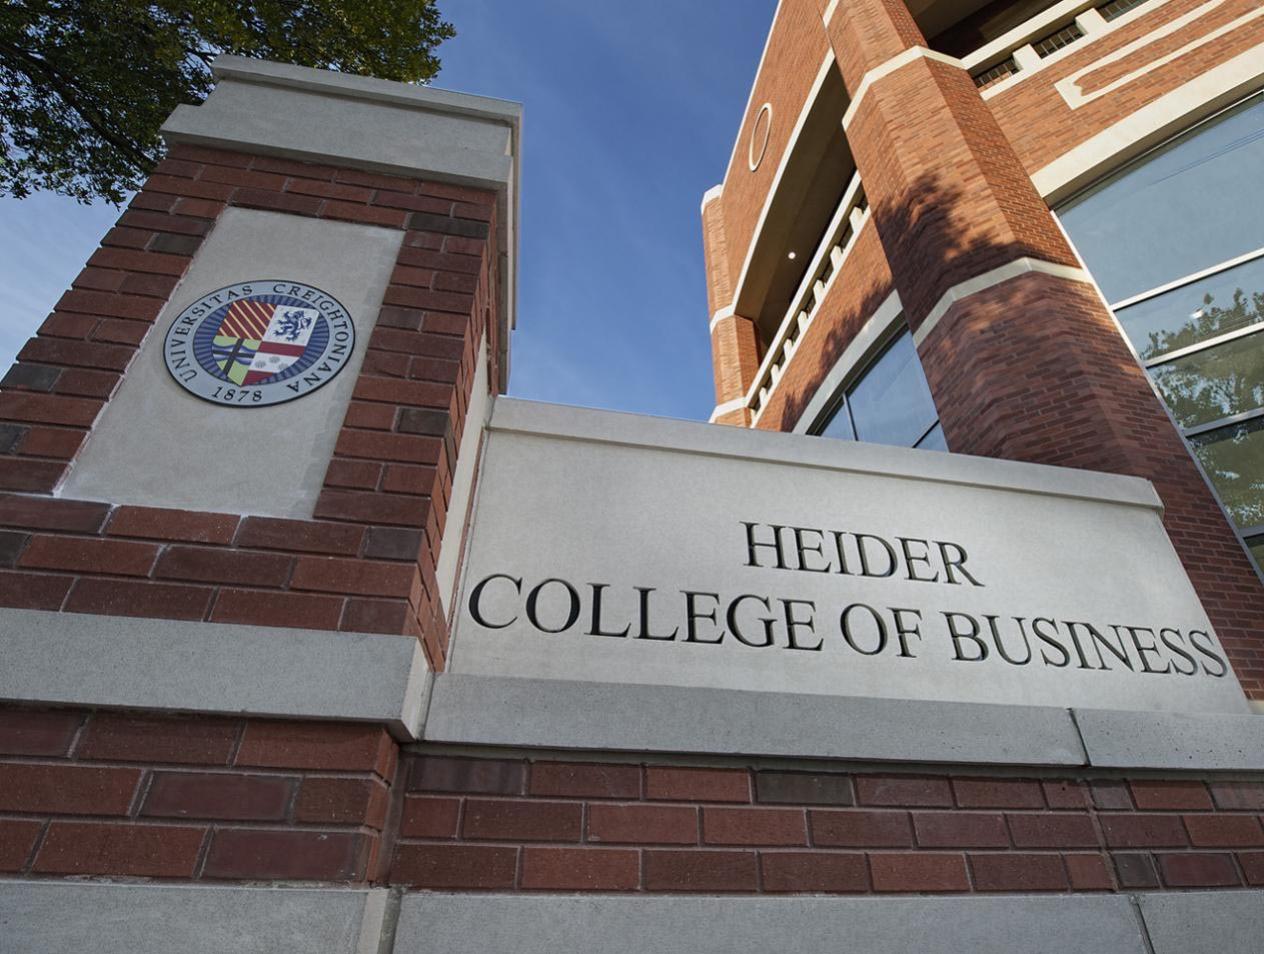 Heider-College-of-Business-Brick-sign-Creighton-University